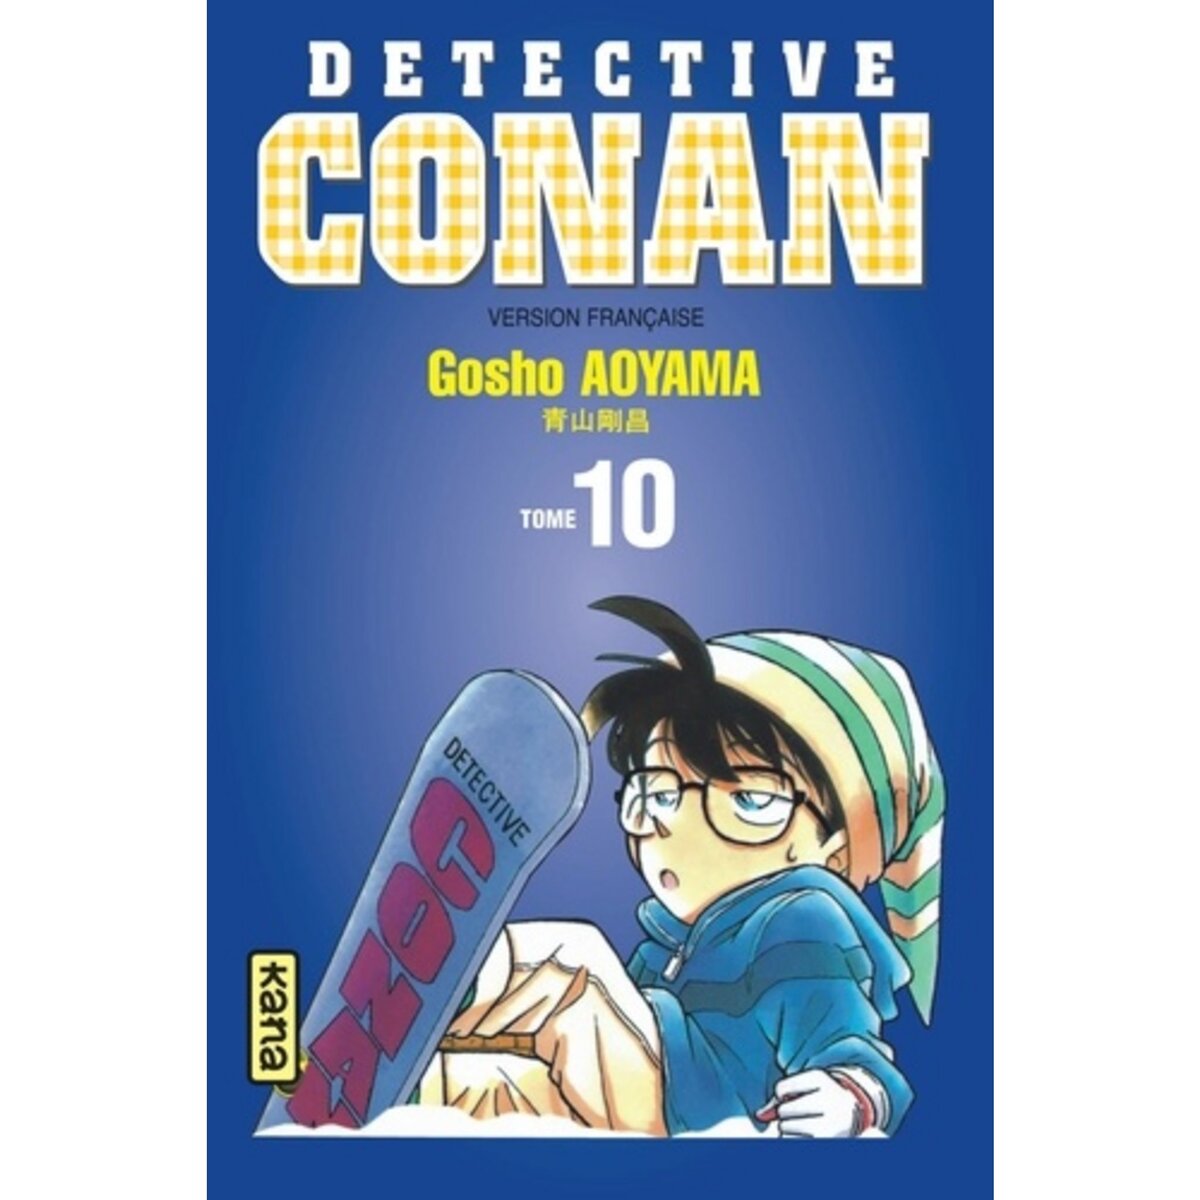  DETECTIVE CONAN TOME 10, Aoyama Gôshô